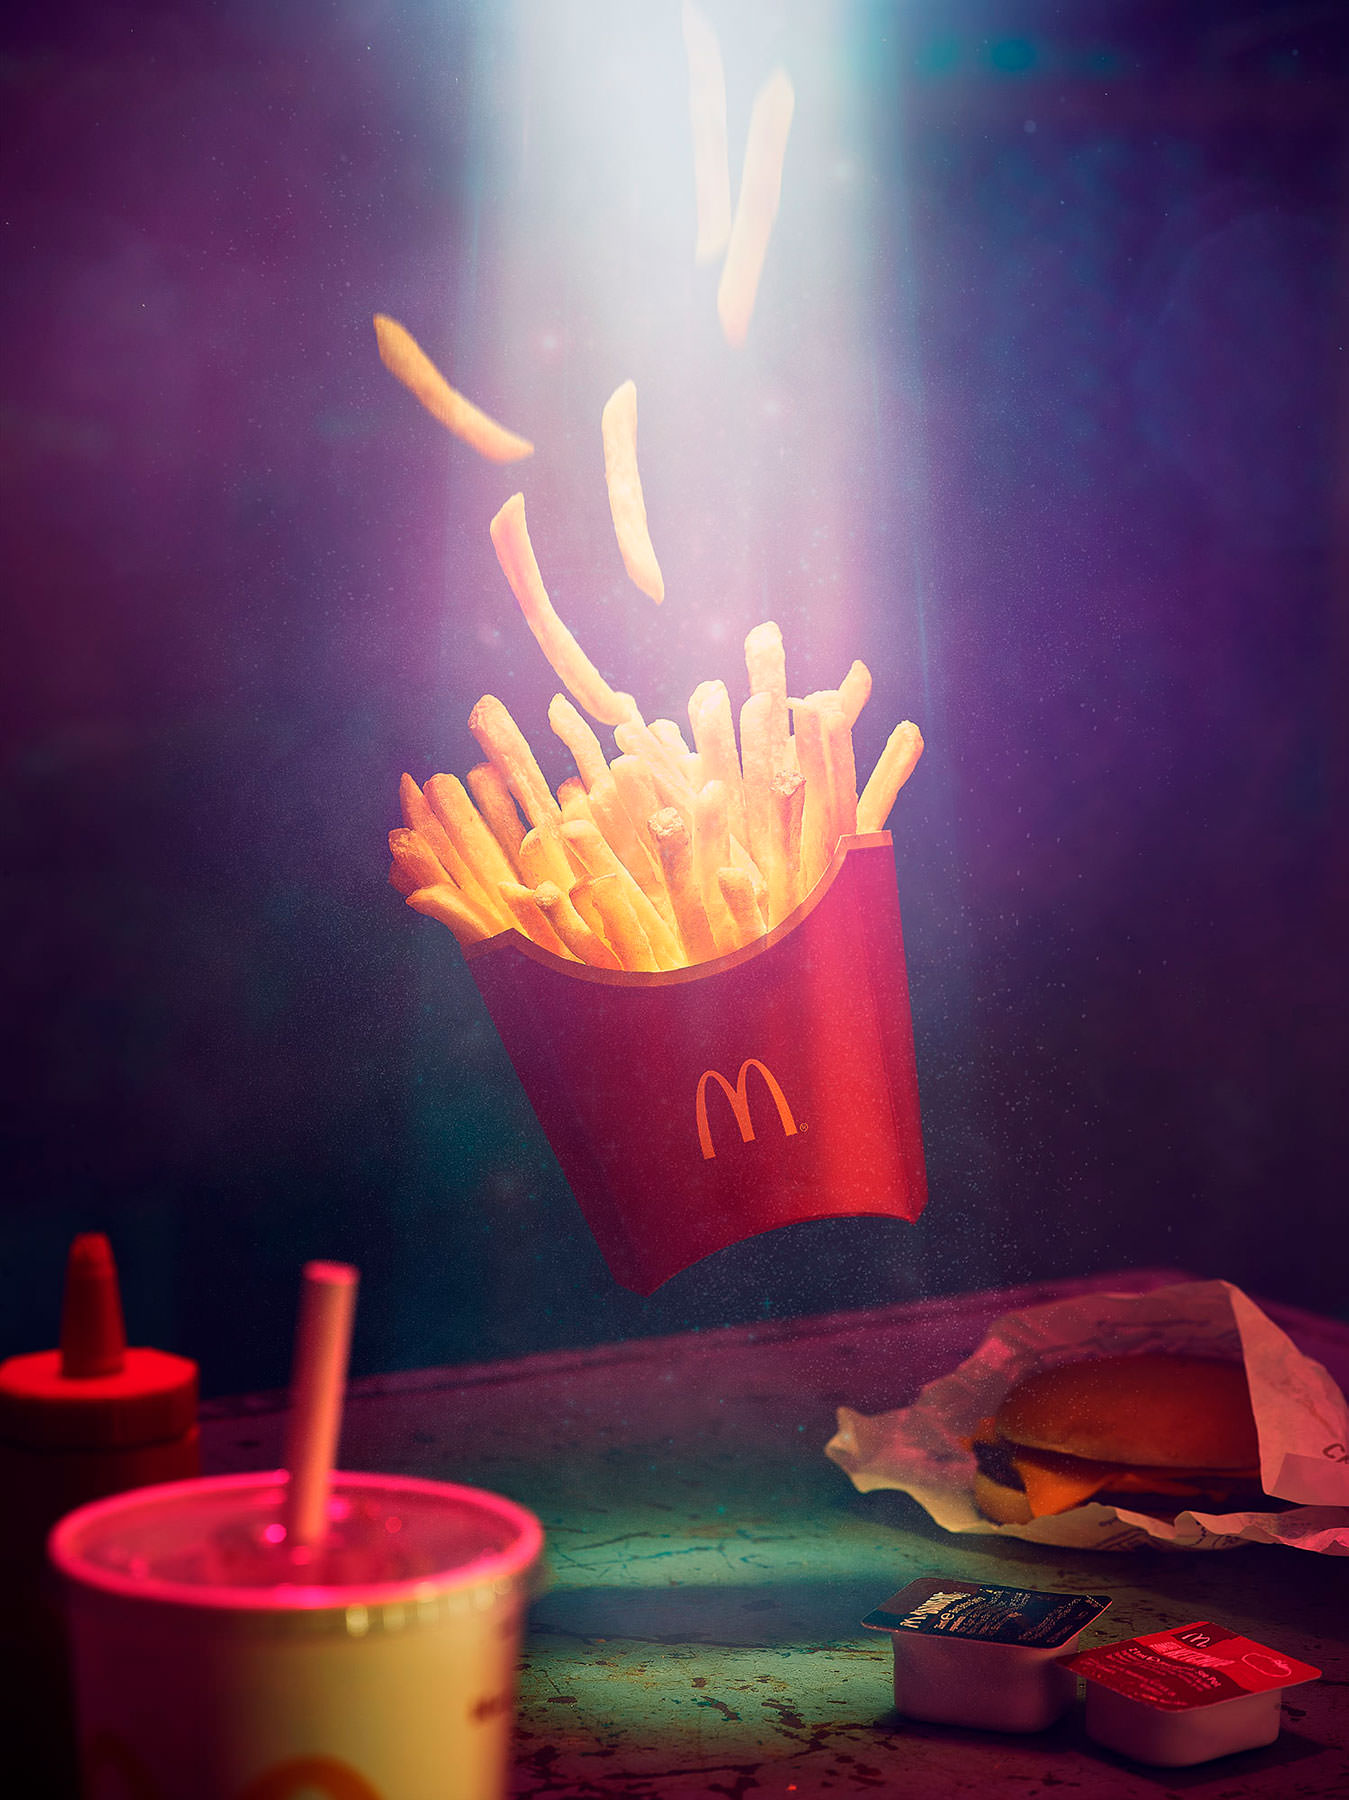 Macdonalds potato fries being stolen by a ufo - London Food & Drinks Photographer